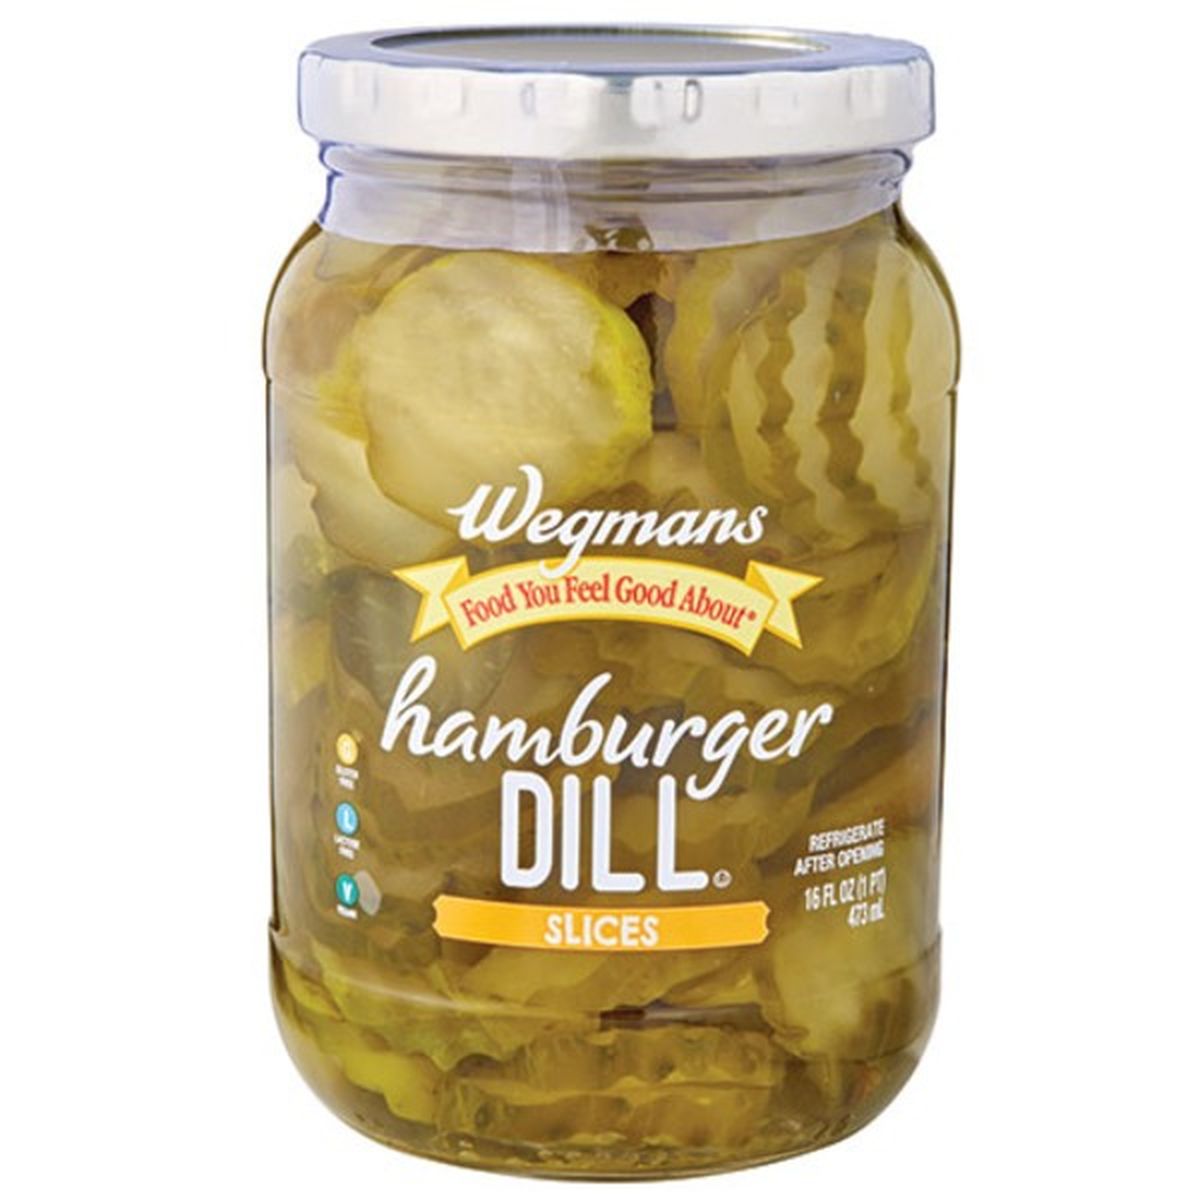 Calories in Wegmans Hamburger Dill Slices